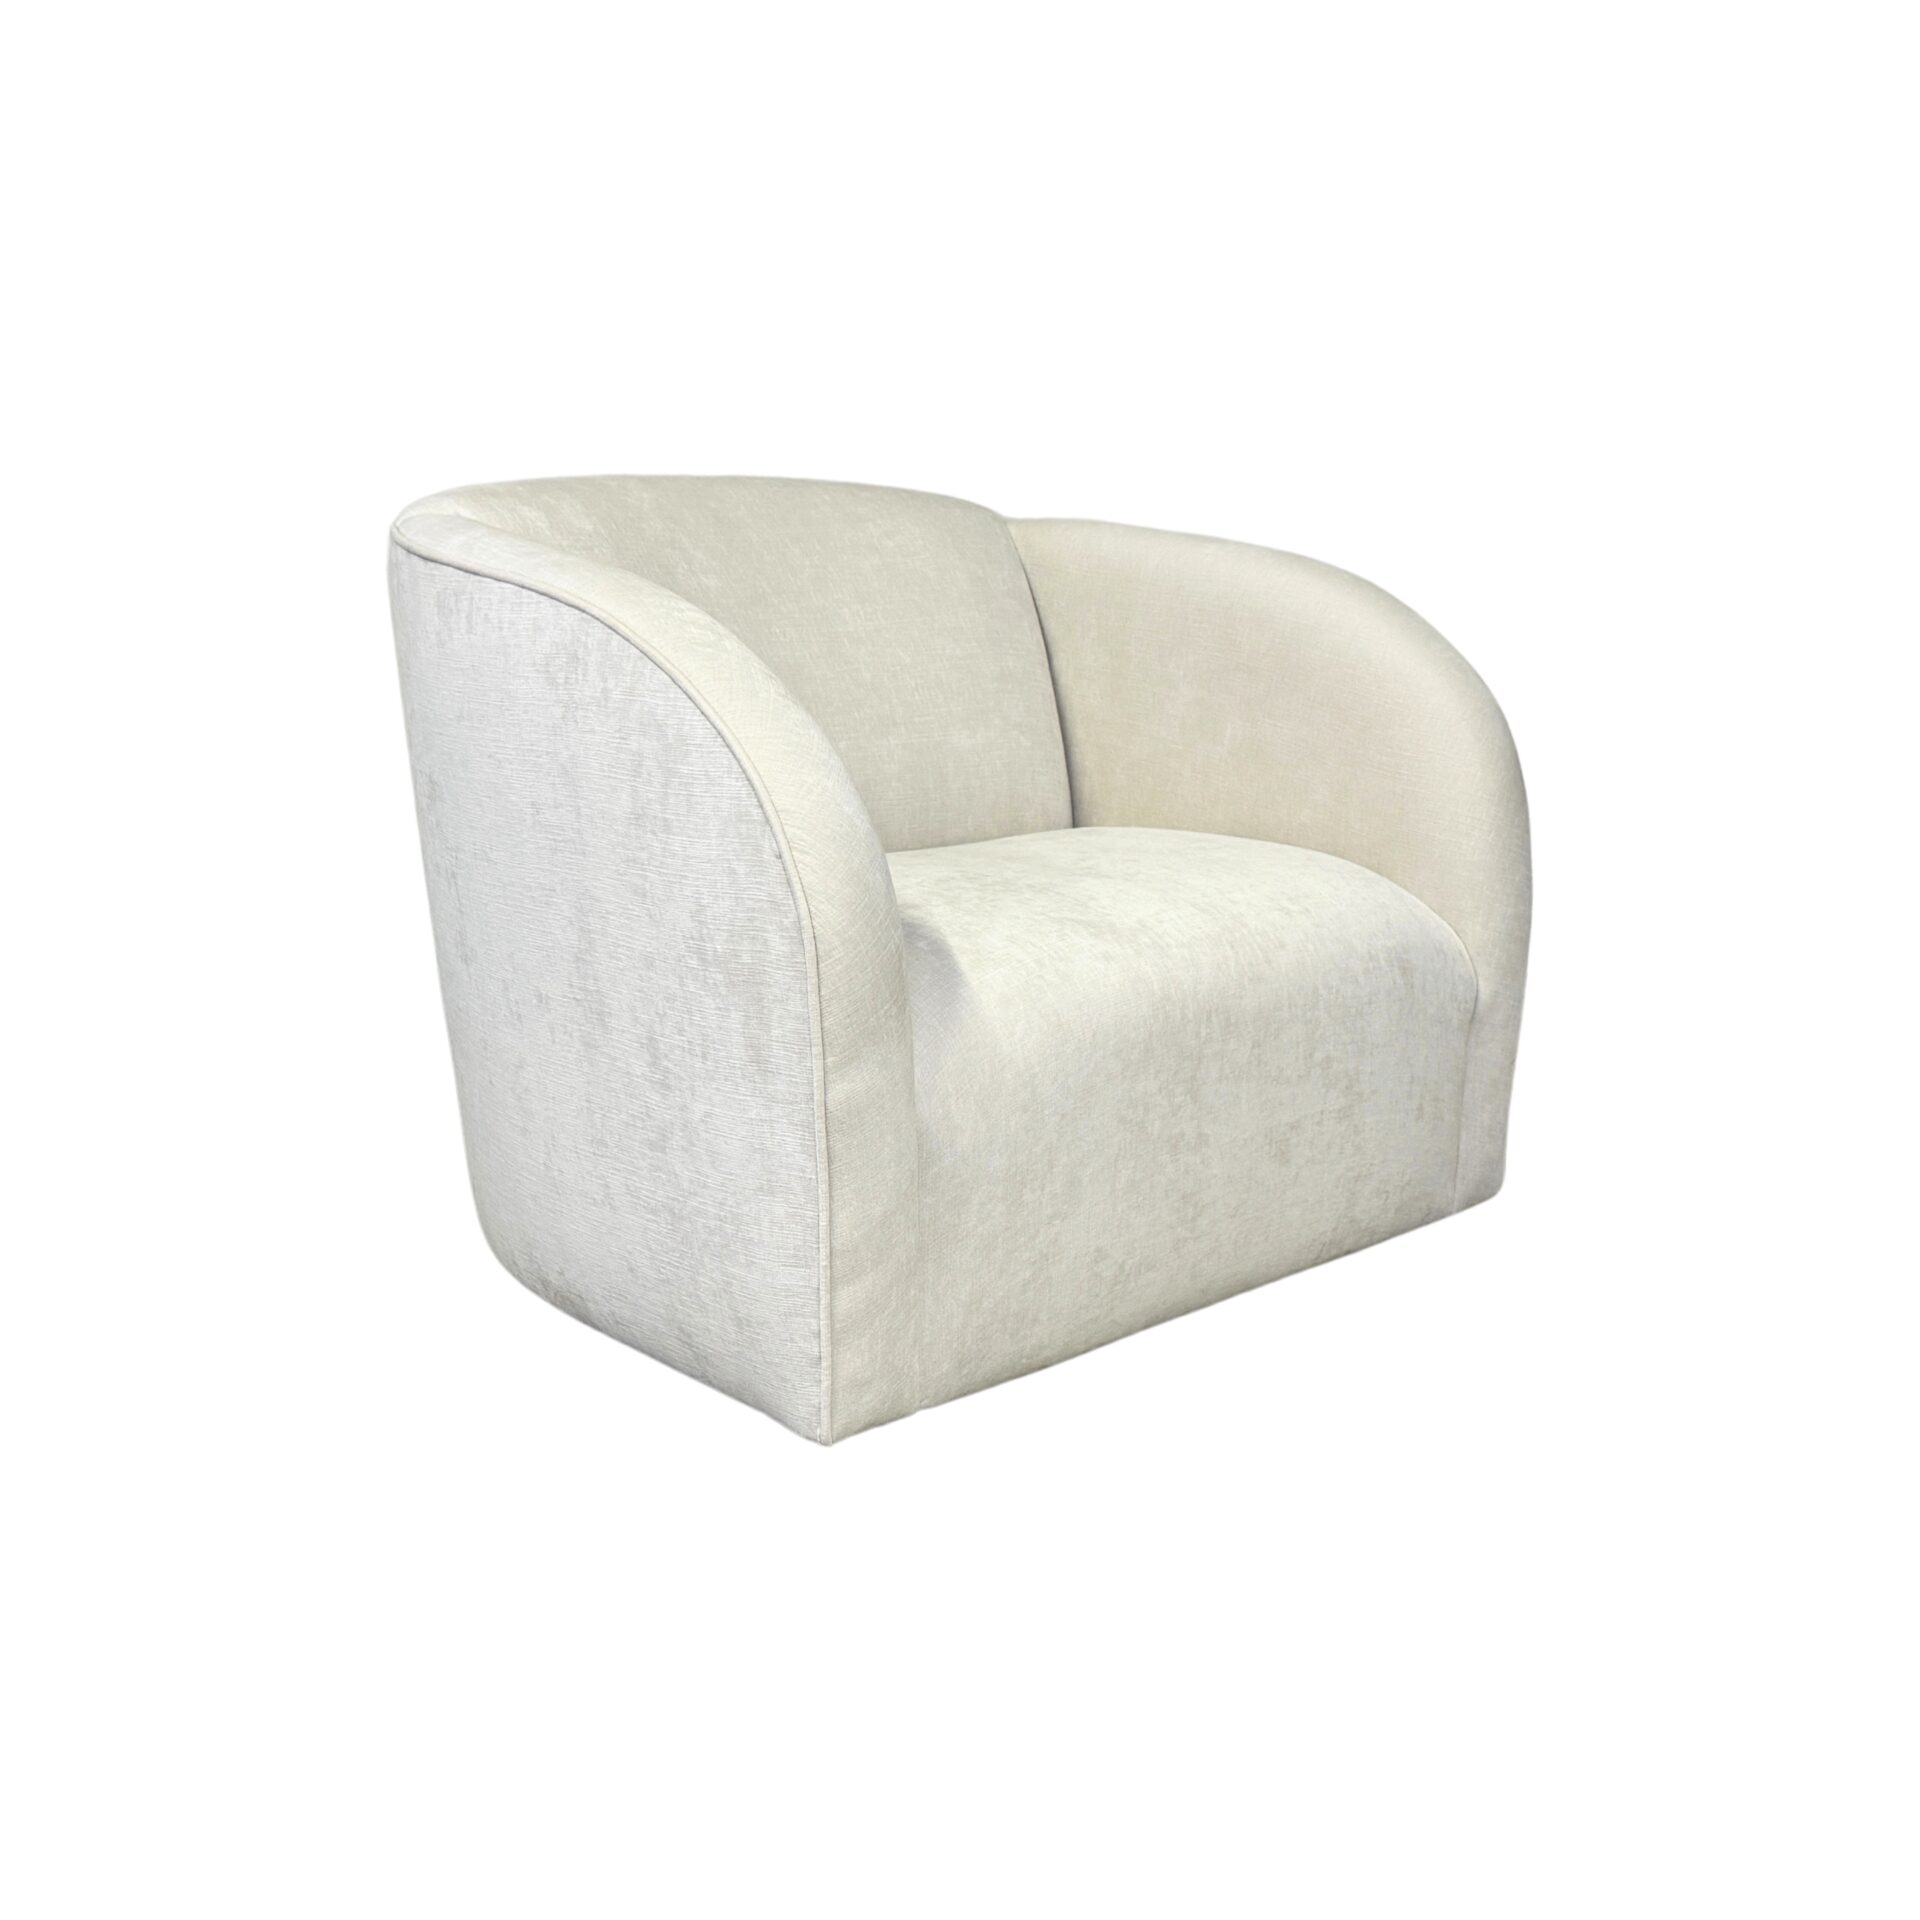 ERBA-2-upholstered-chair-luxury-furniture-blend-home-furnishings